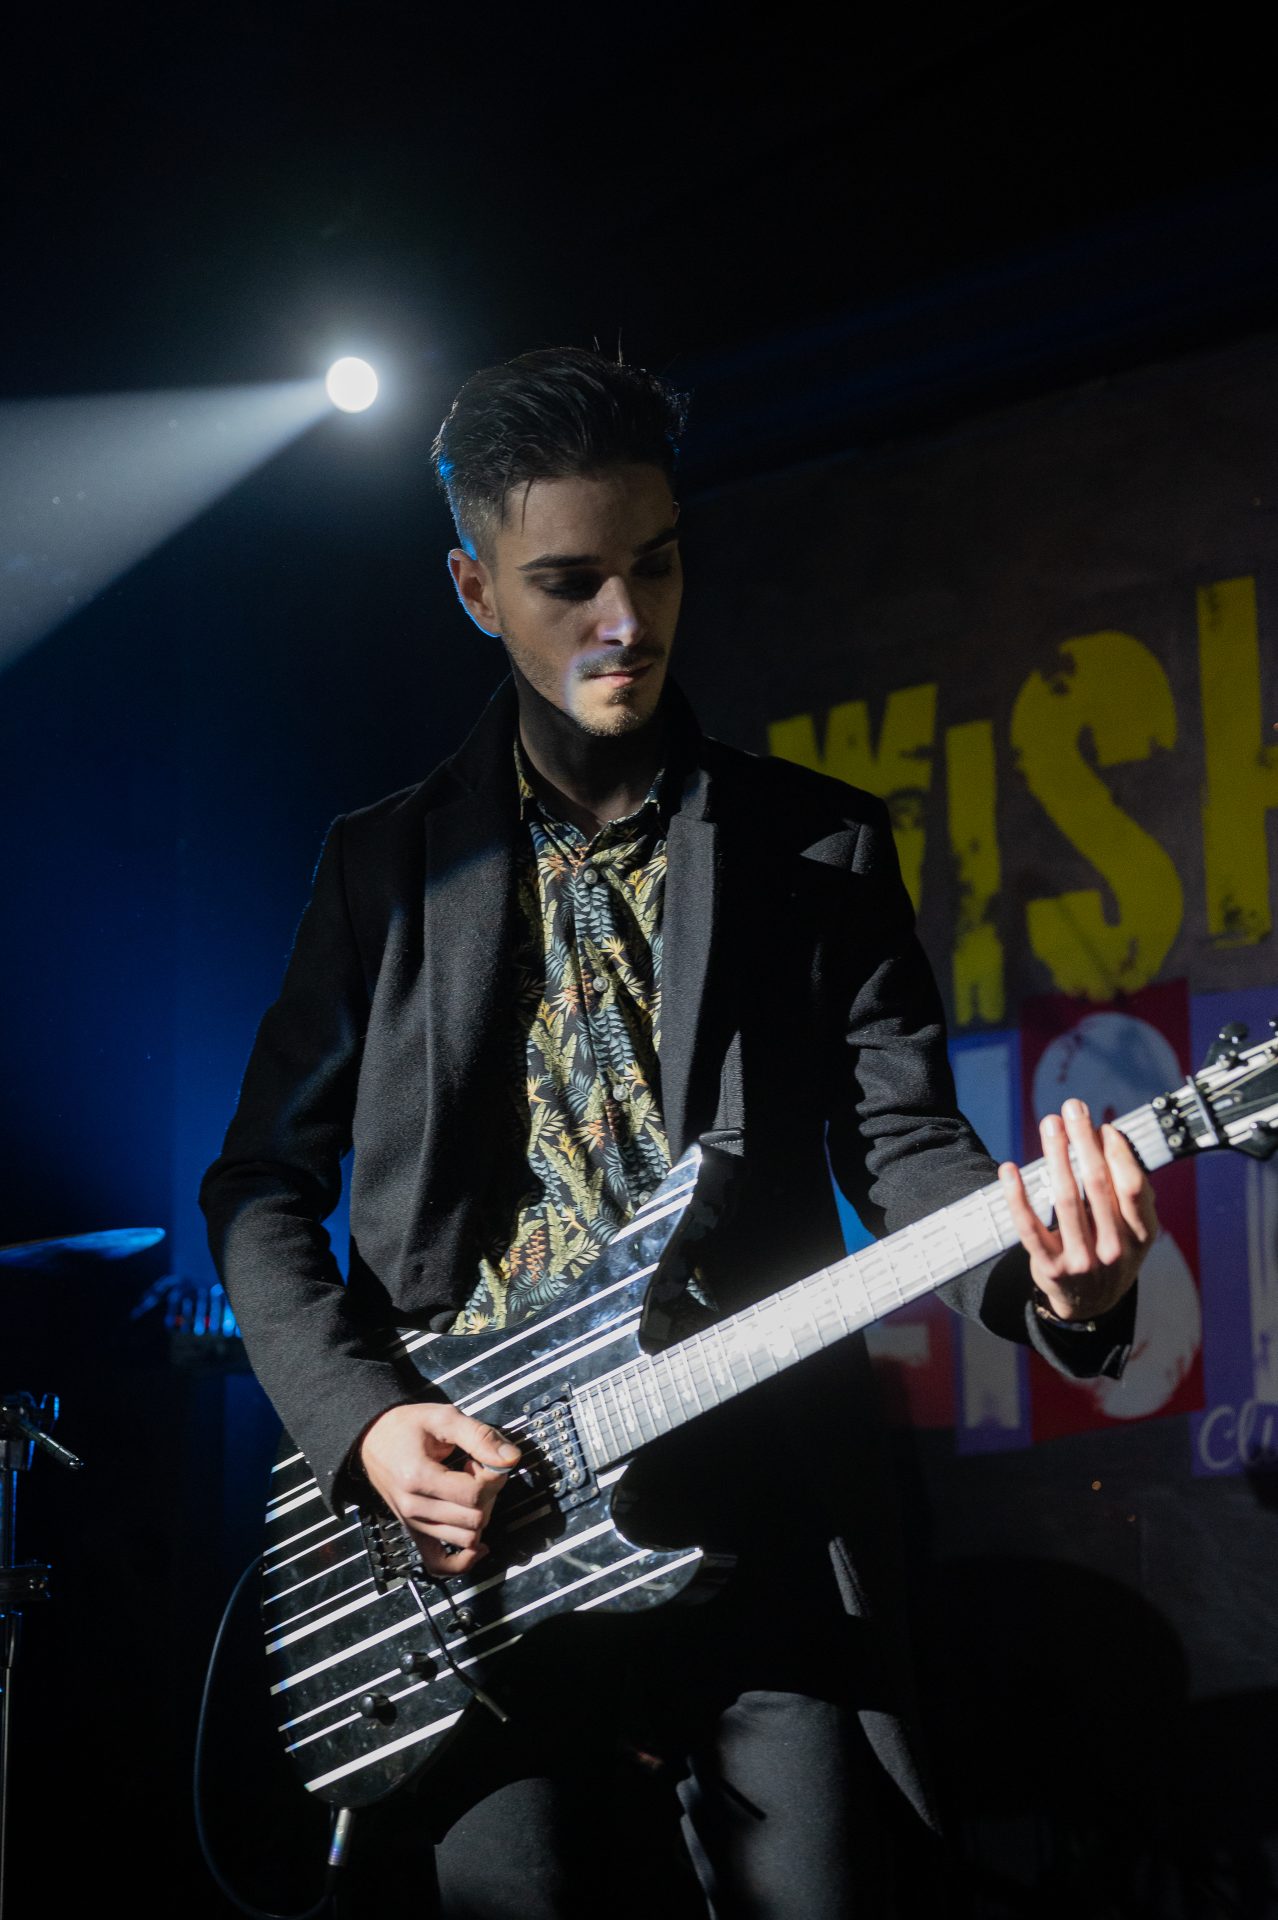 Luca Sebastianelli (Luke Sexx) - Lead Guitarist of the band Falling Giant